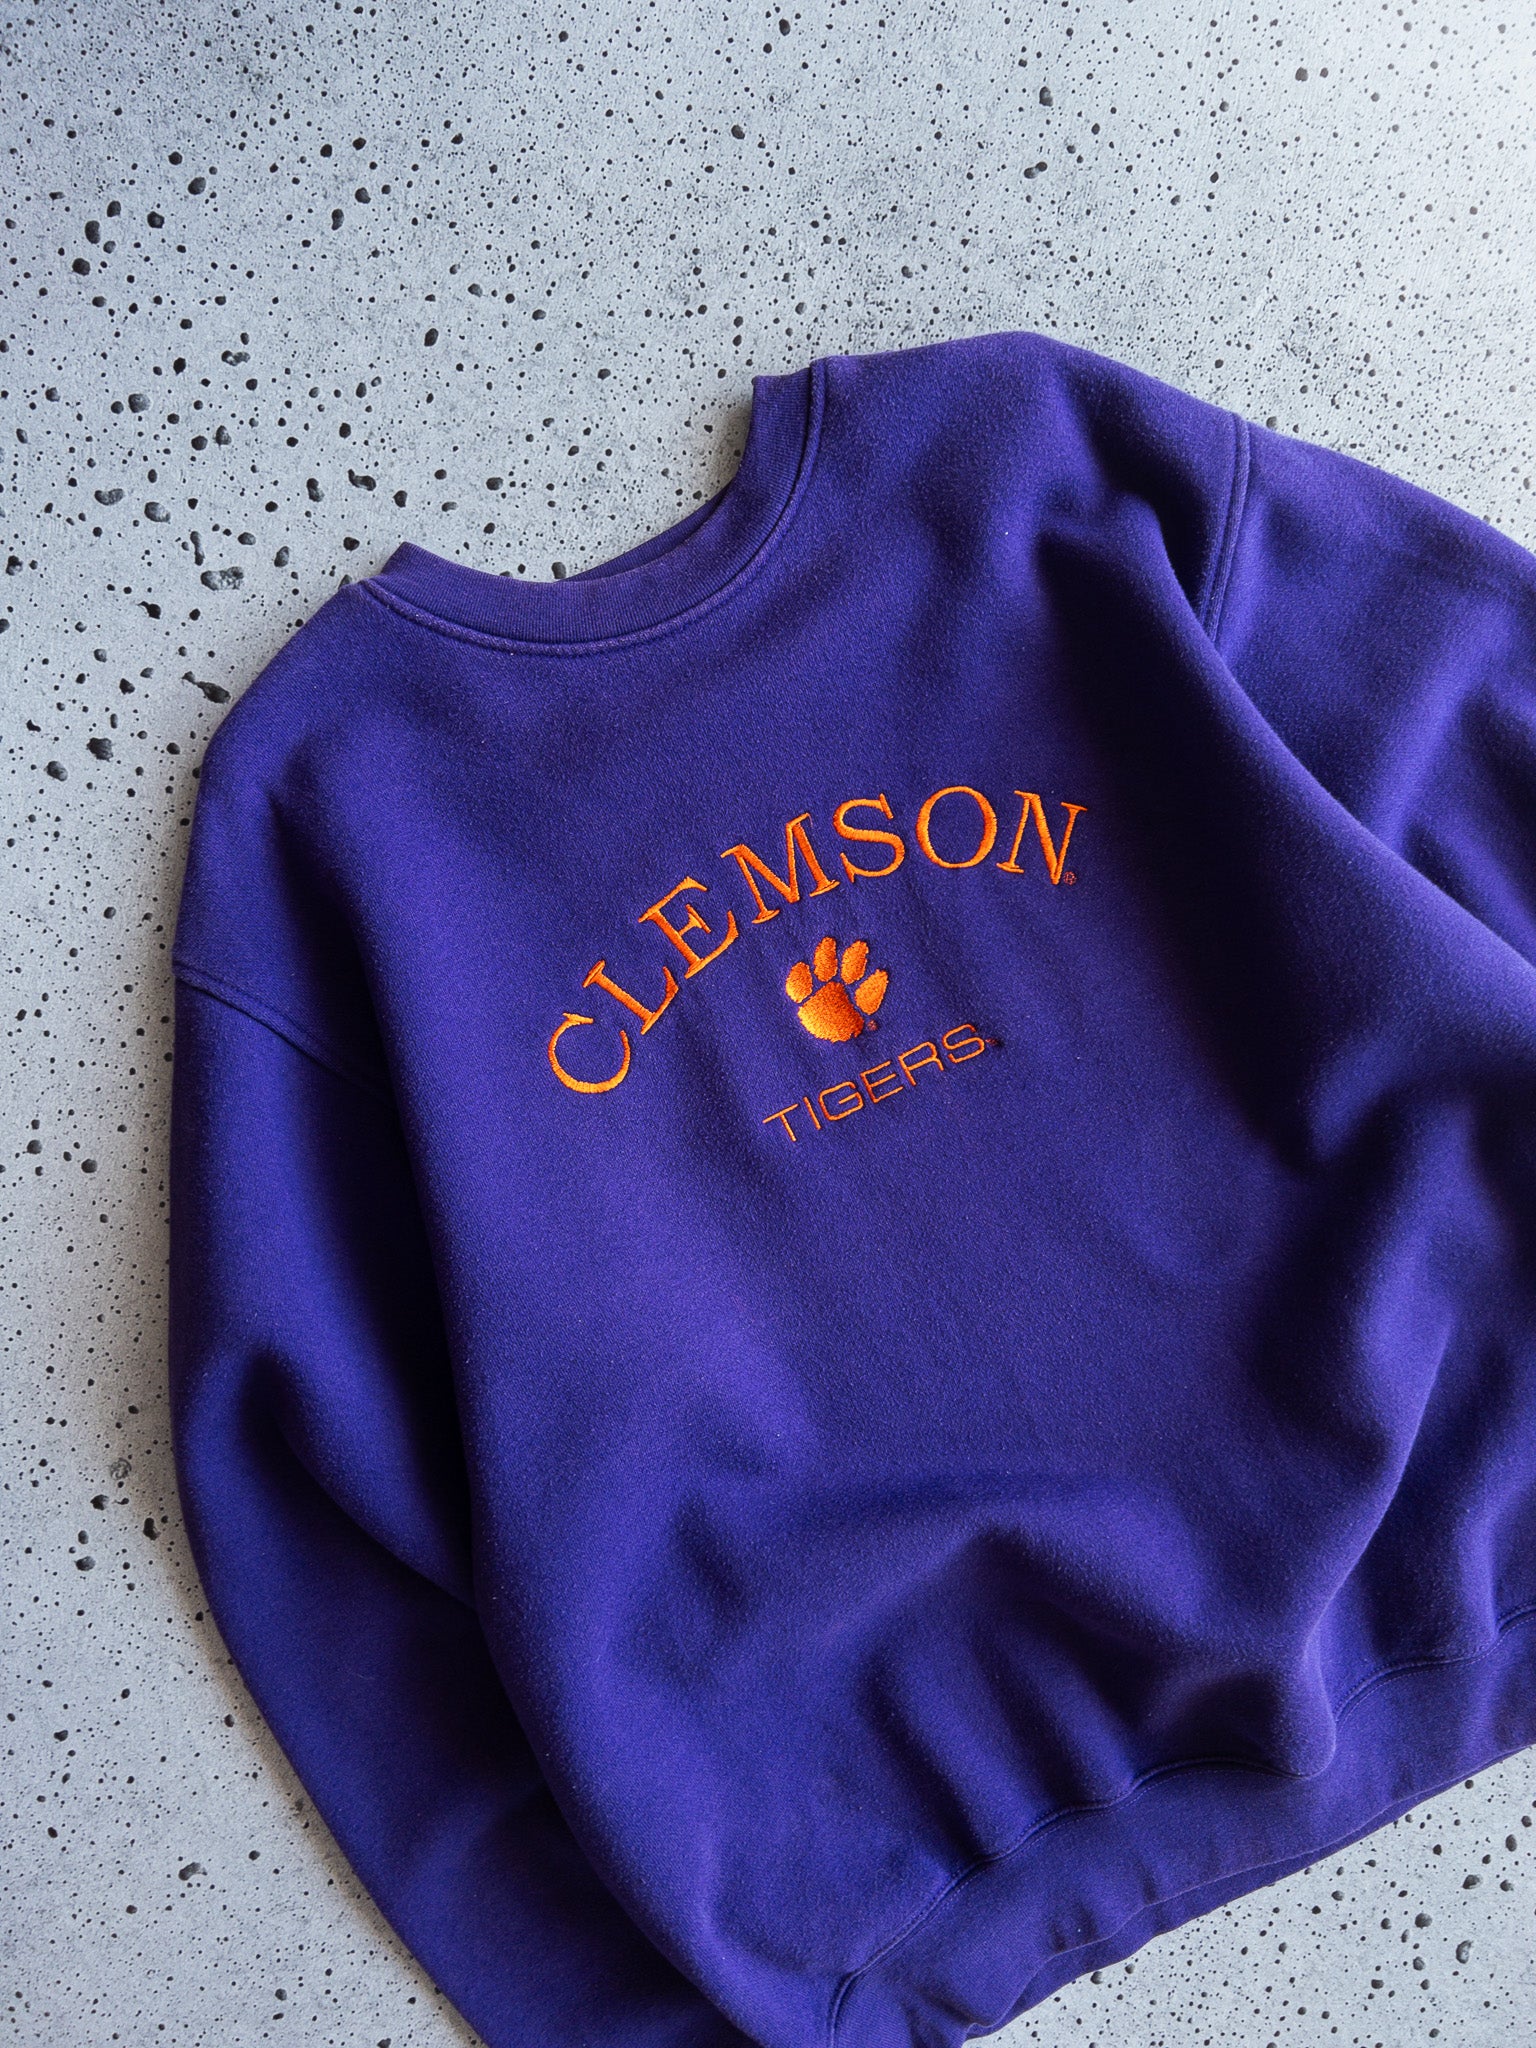 Vintage Clemson Tigers Sweatshirt (L)